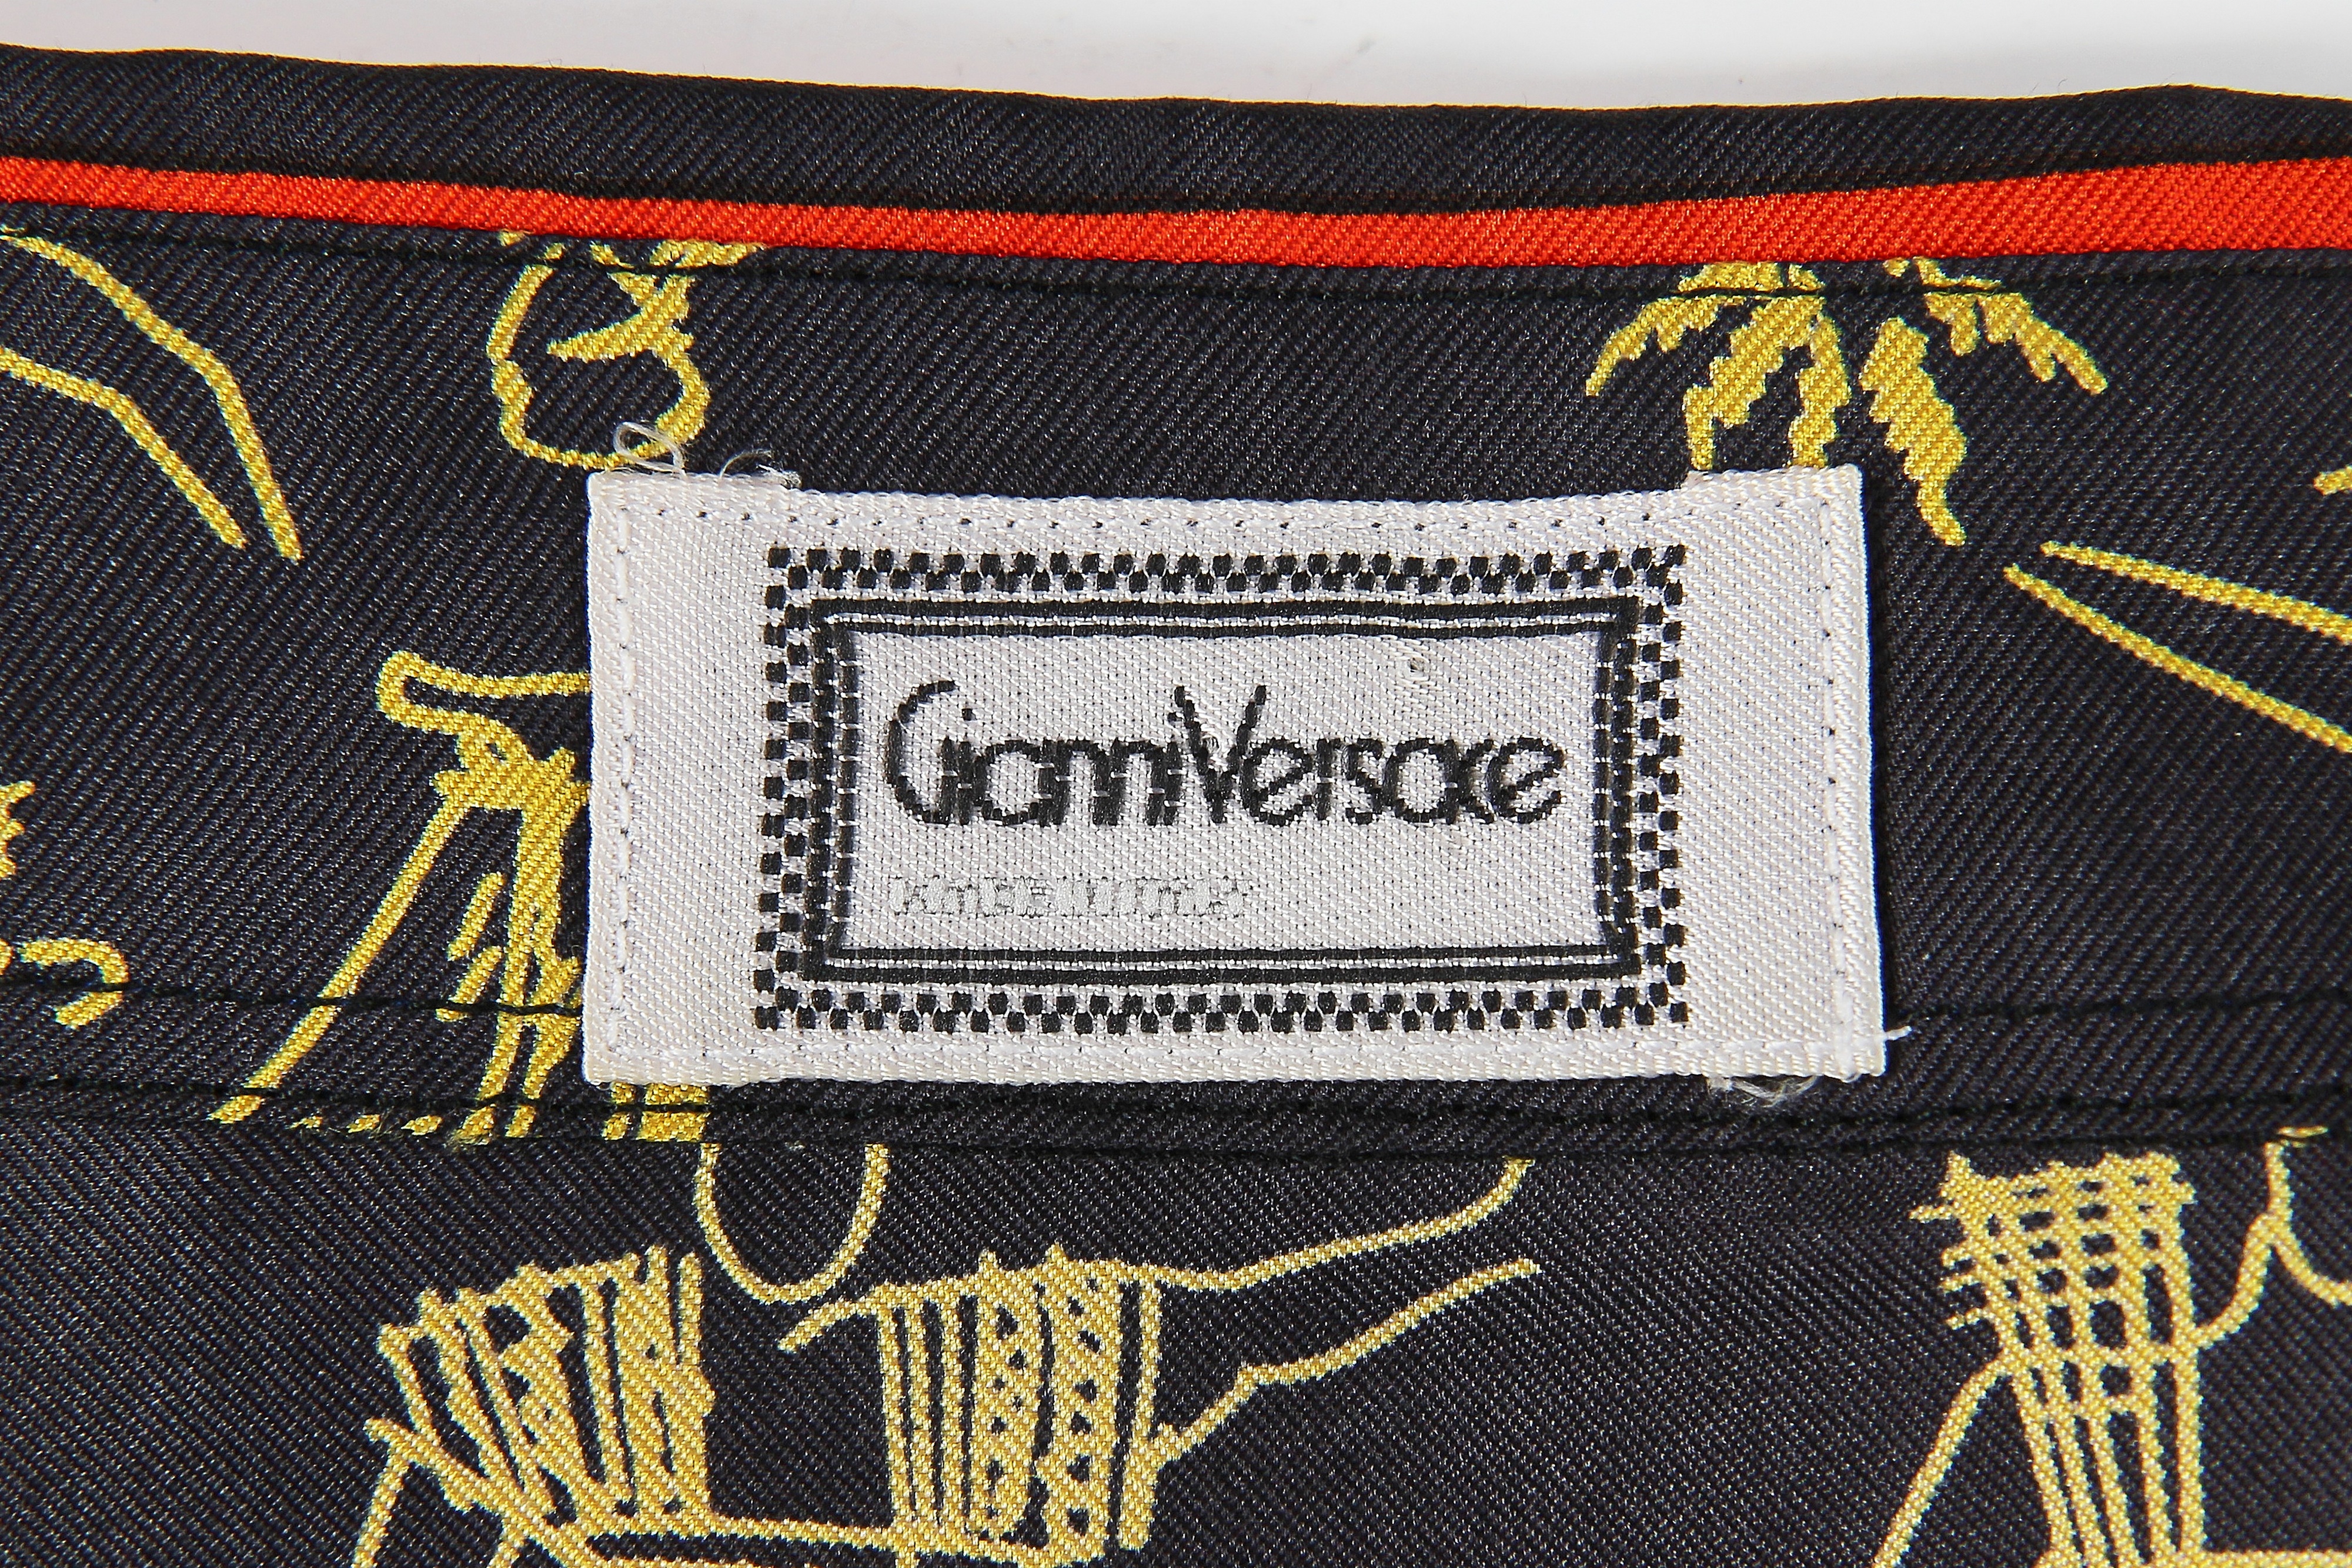 Lot 84 - A Gianni Versace men's printed silk shirt